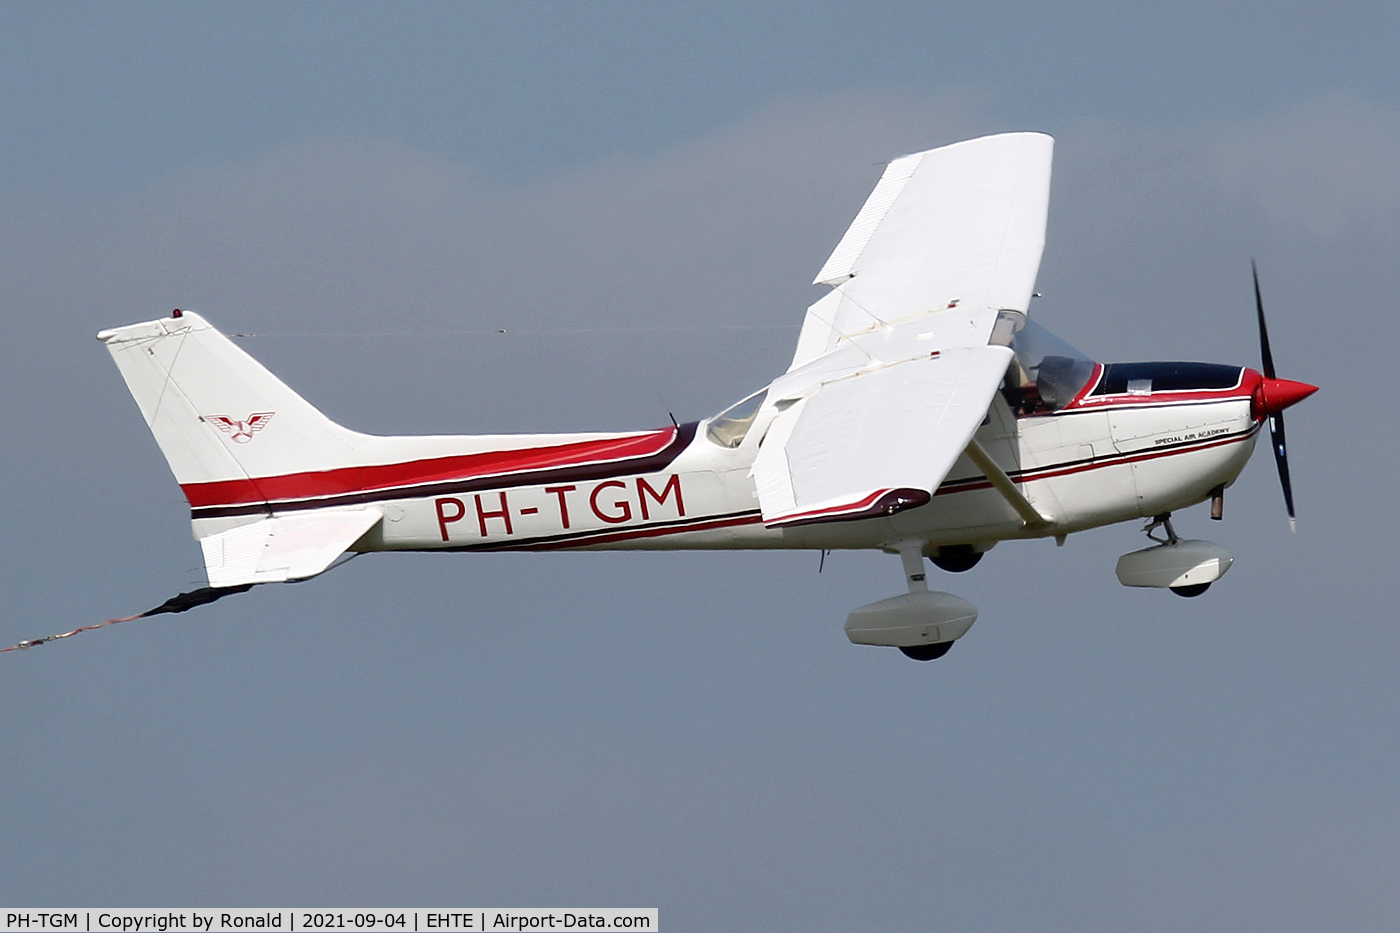 PH-TGM, 1979 Reims F172N Skyhawk C/N 1887, at teuge